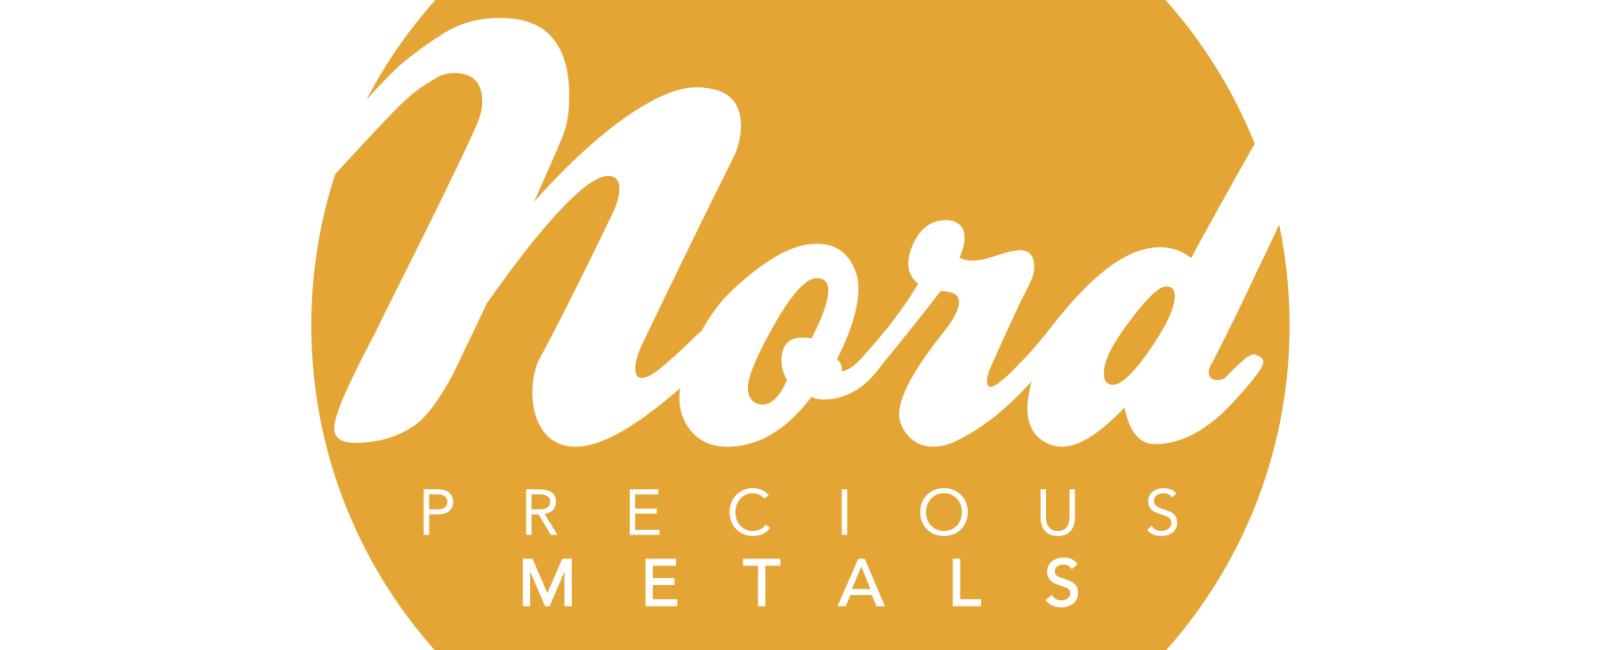 Nord Precious Metals Begins Trading Under New Symbol “NTH”